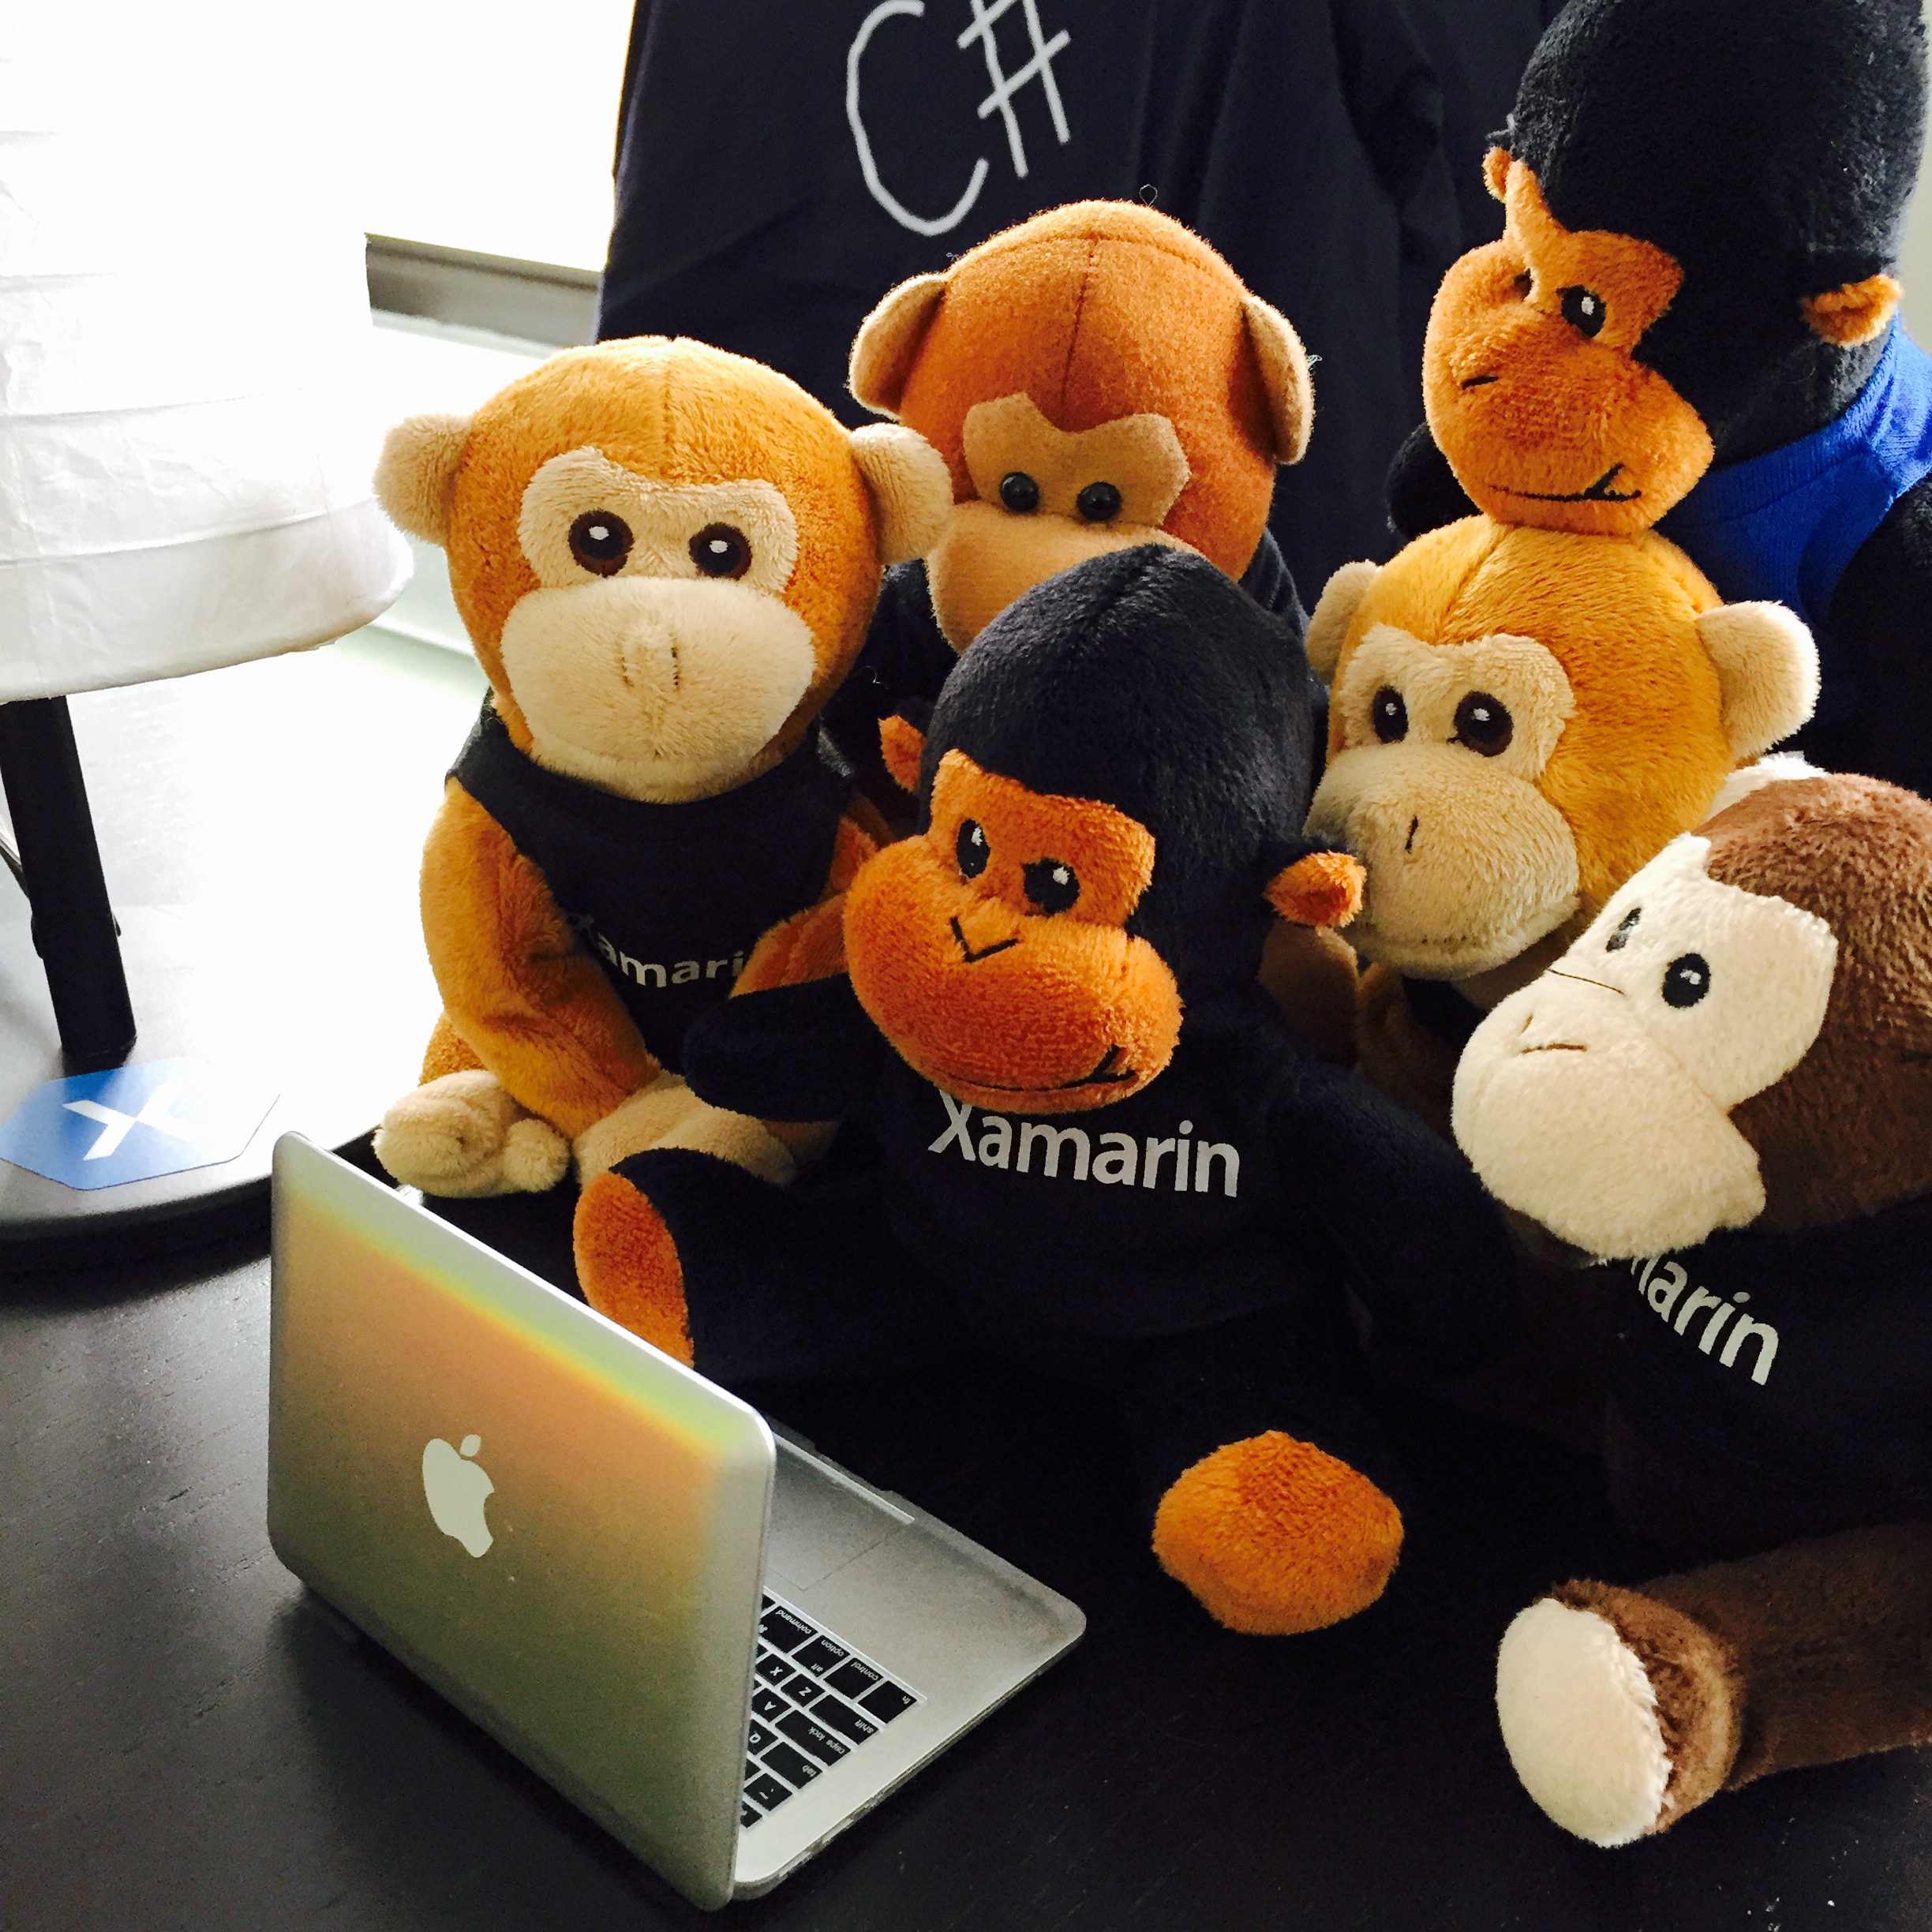 Plush monkeys around a laptop